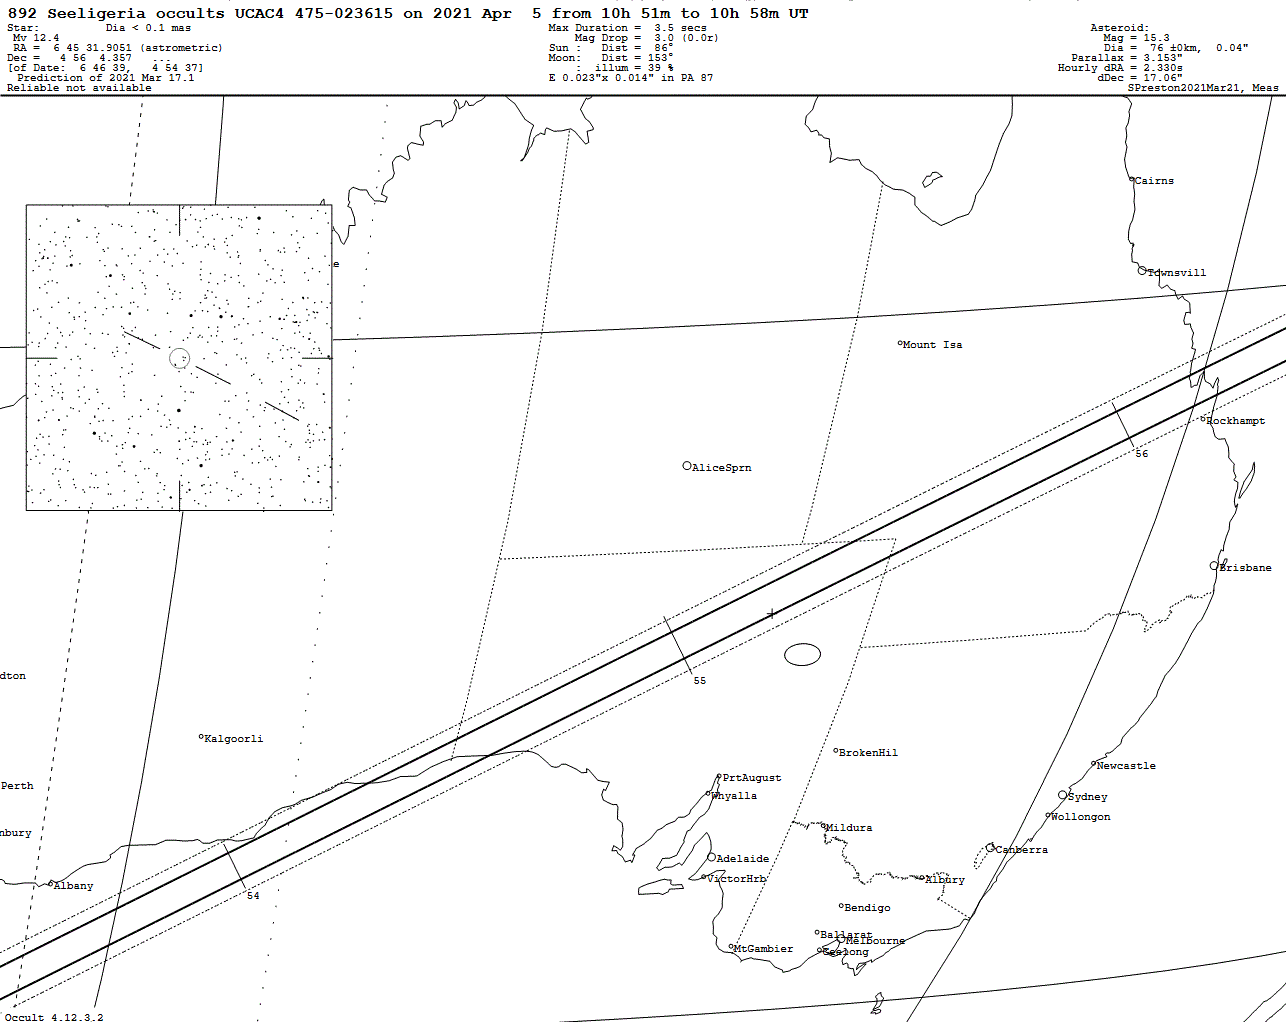 Seeligeria Update Map